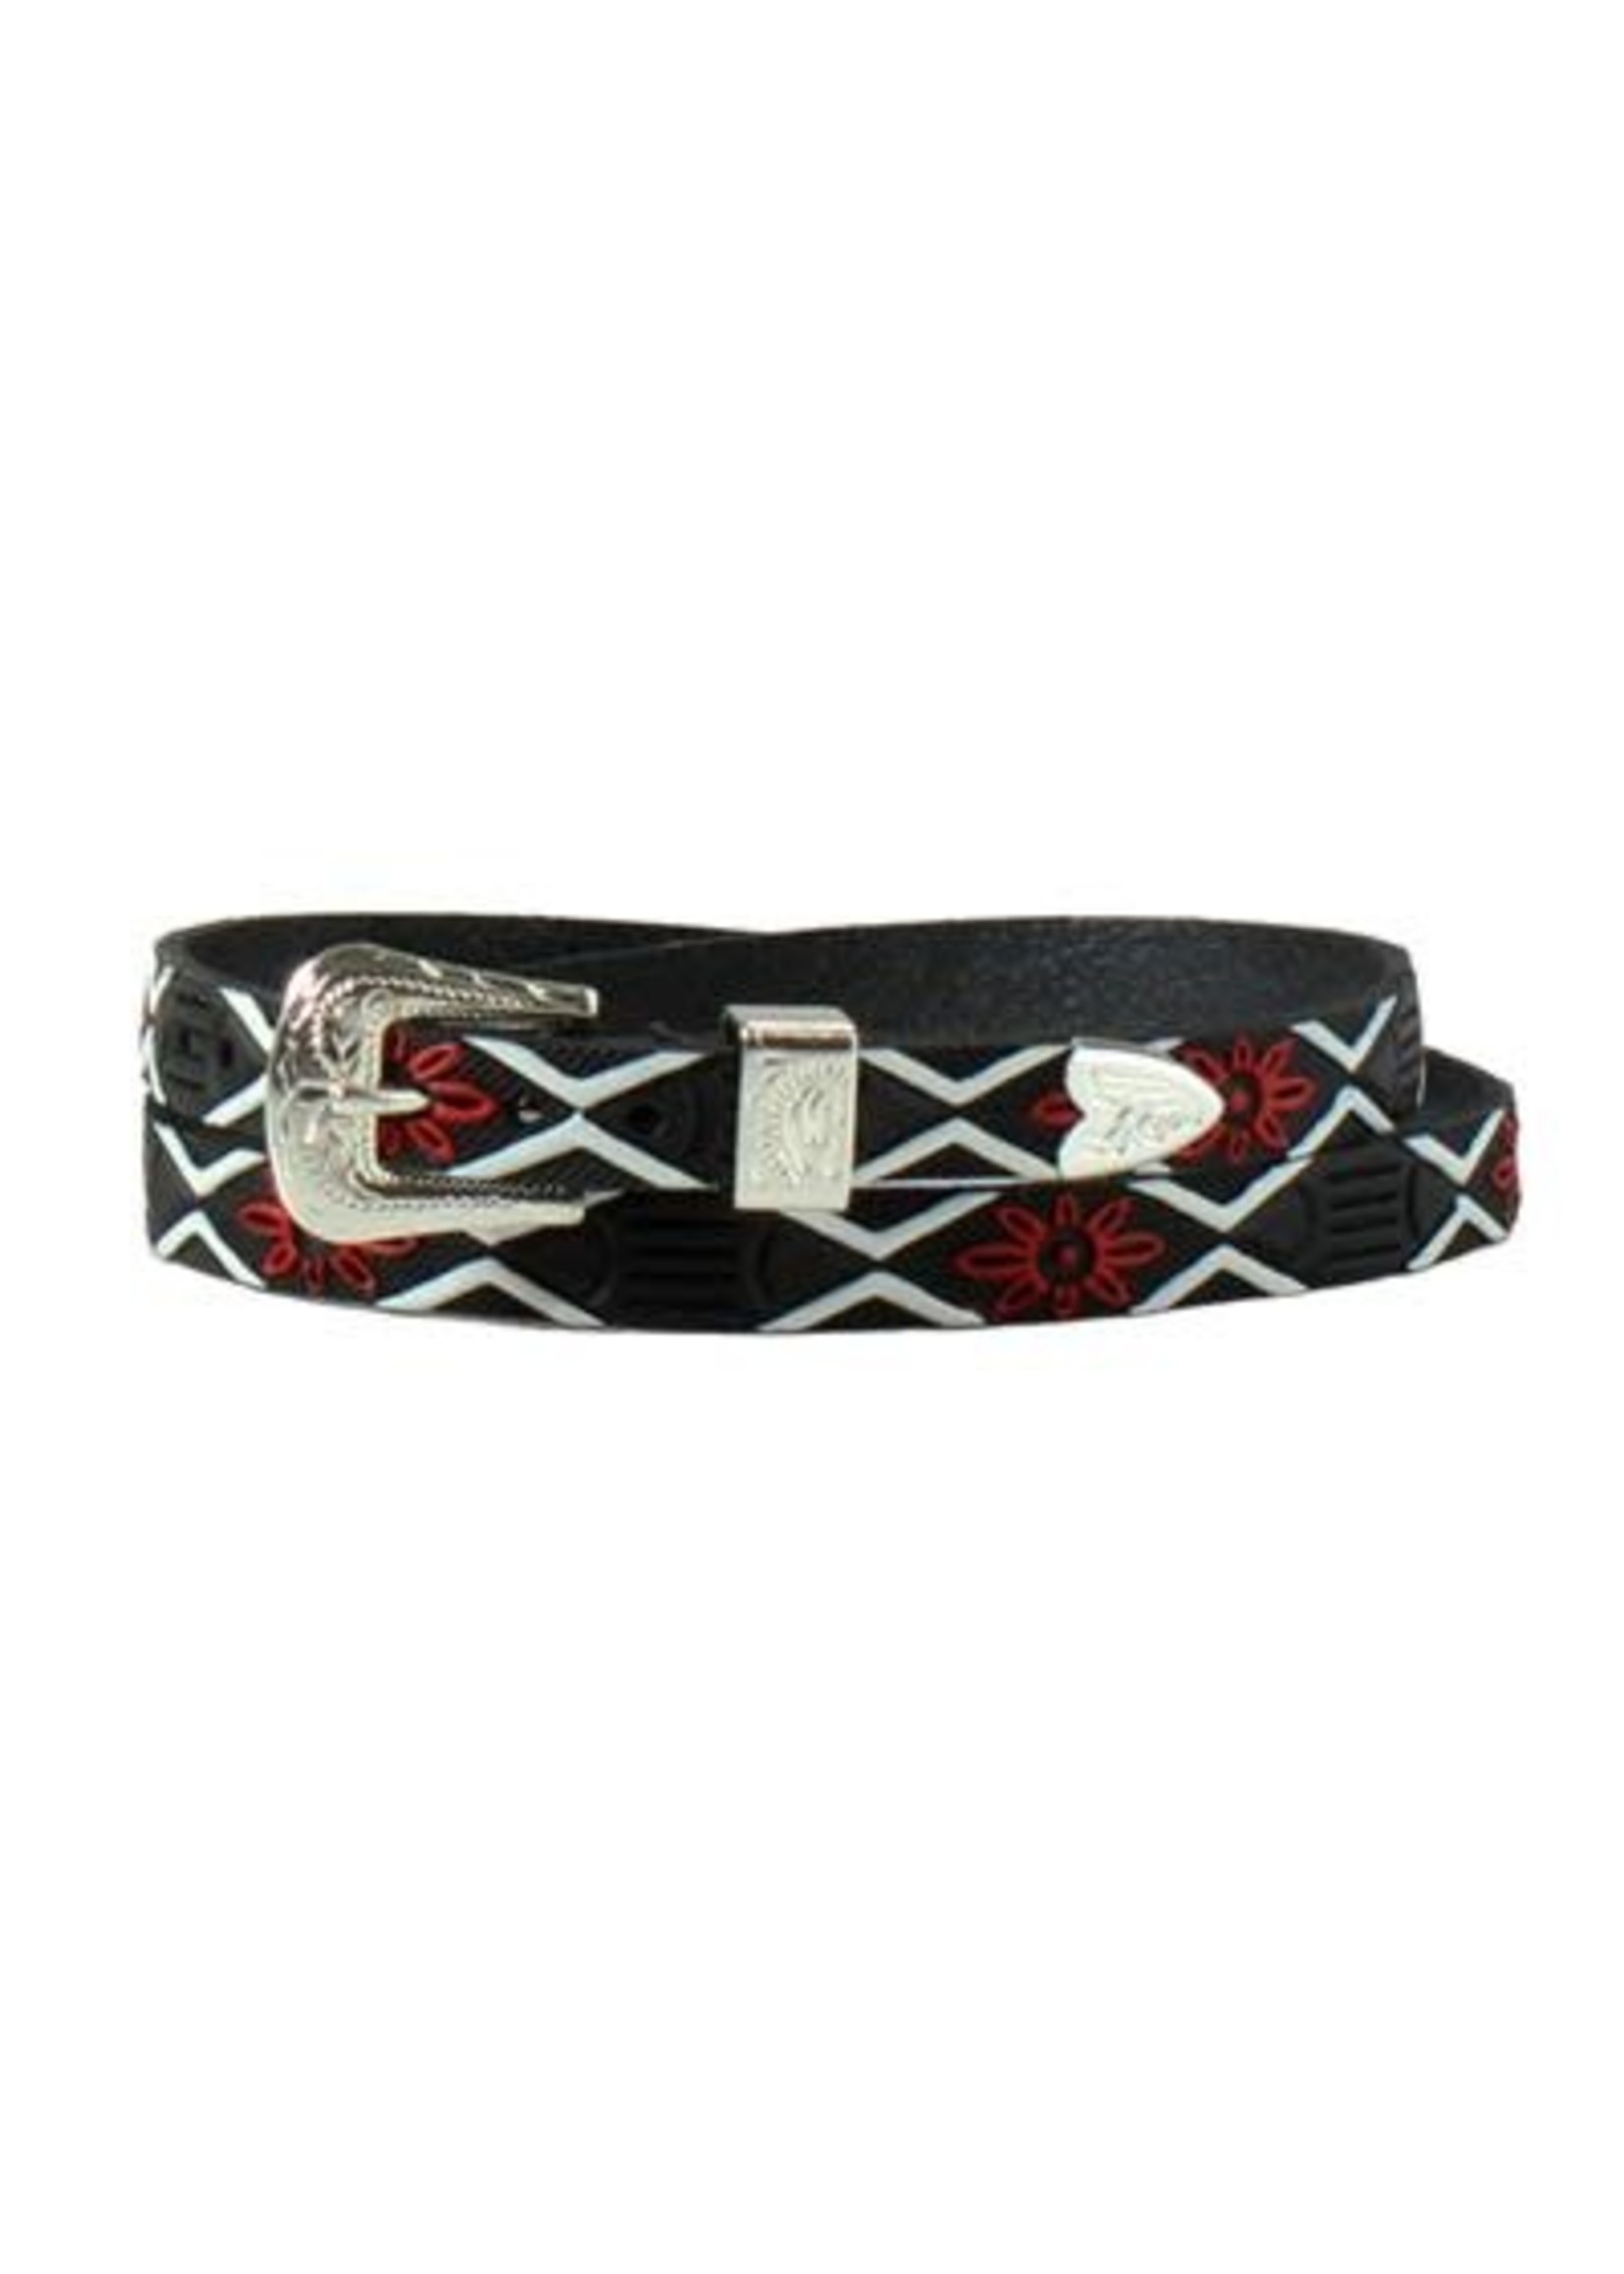 3D Belt co Western Mens Hatband Leather White Arrow Red Flower Black